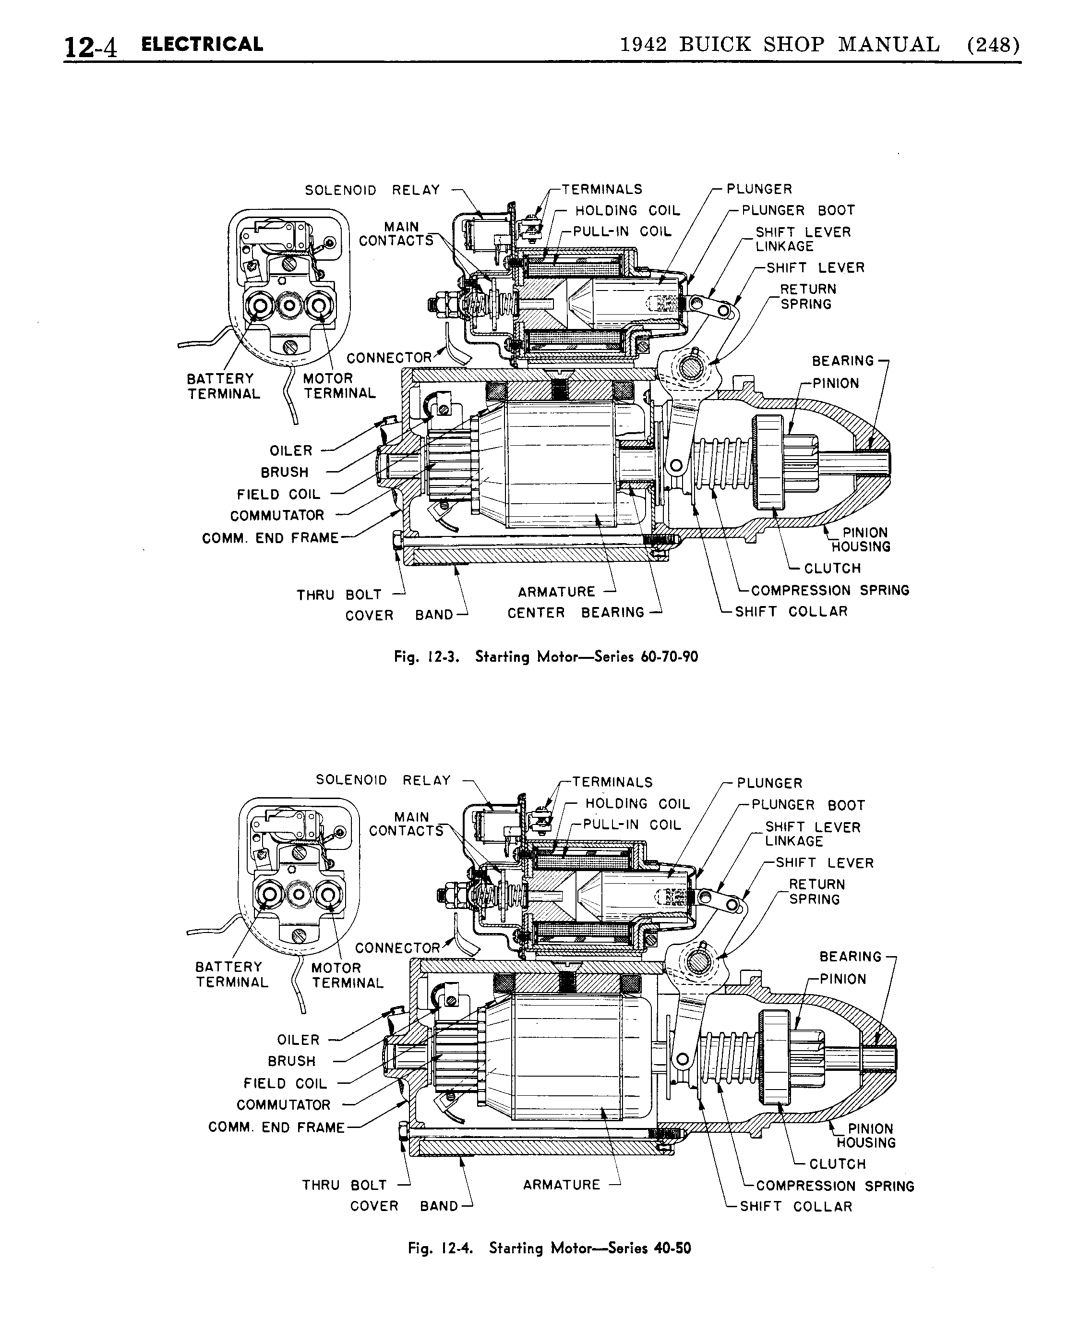 n_13 1942 Buick Shop Manual - Electrical System-004-004.jpg